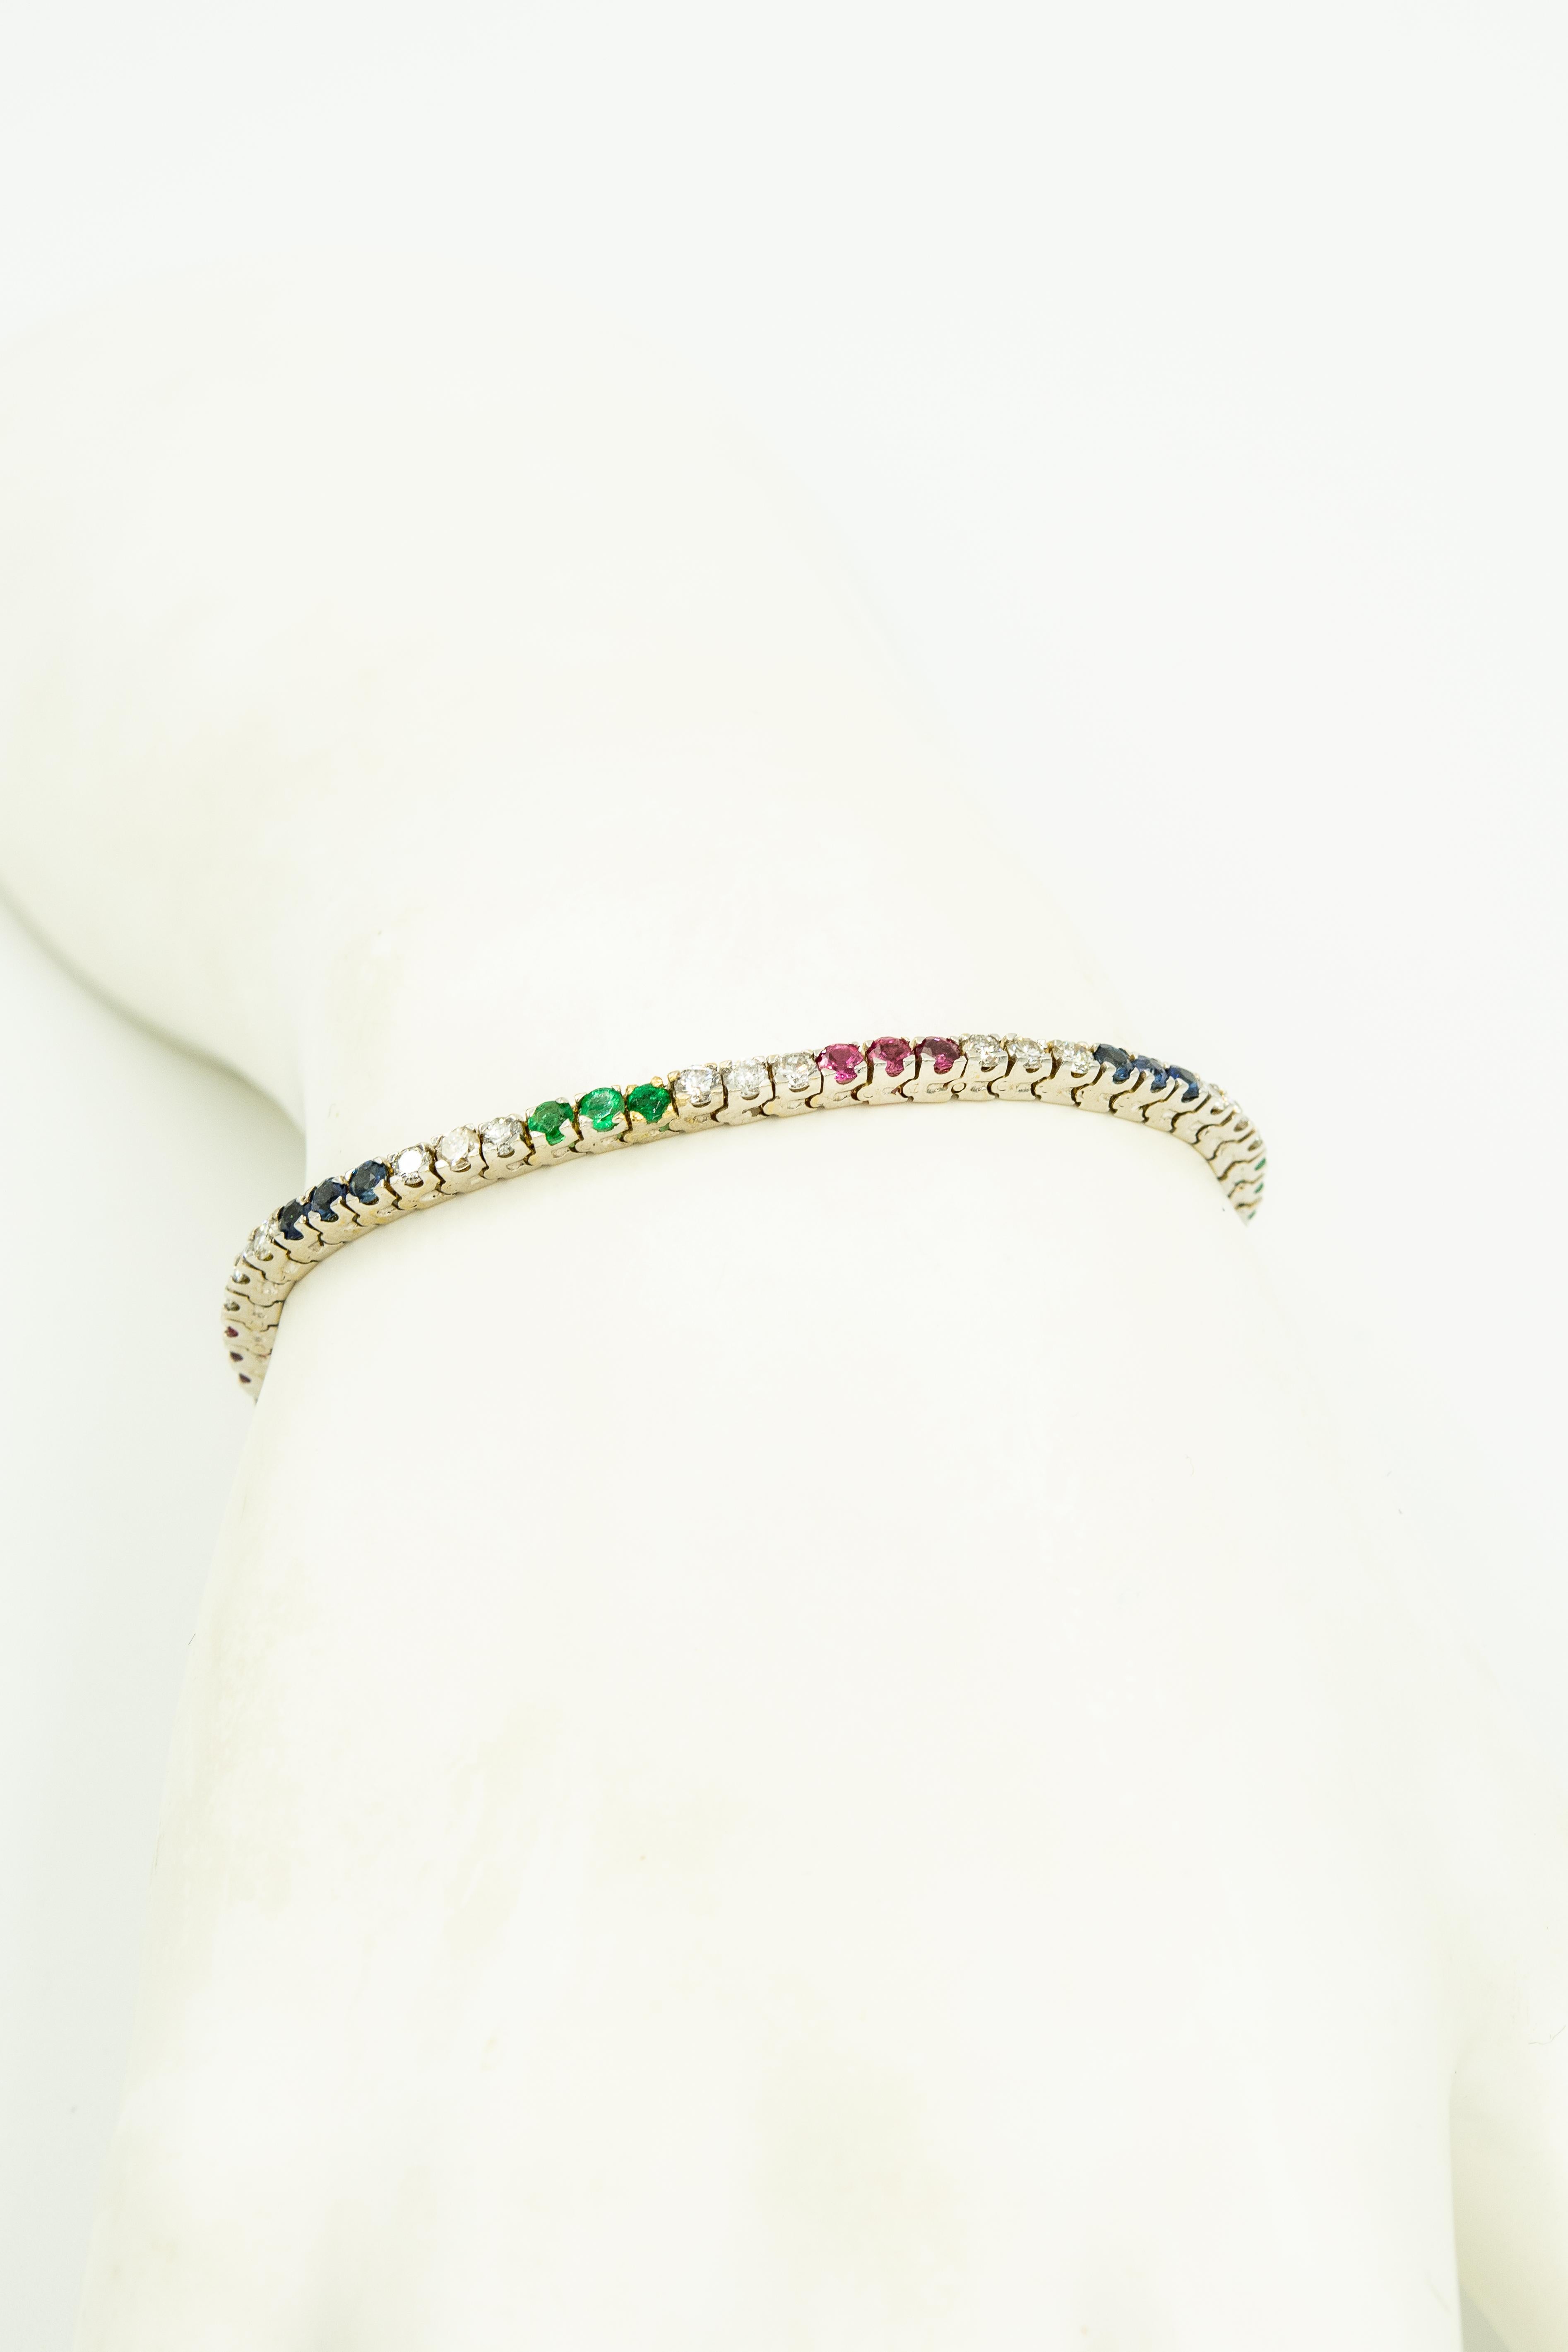 Women's Diamond Ruby Sapphire Emerald White Gold Tennis Line Bracelet